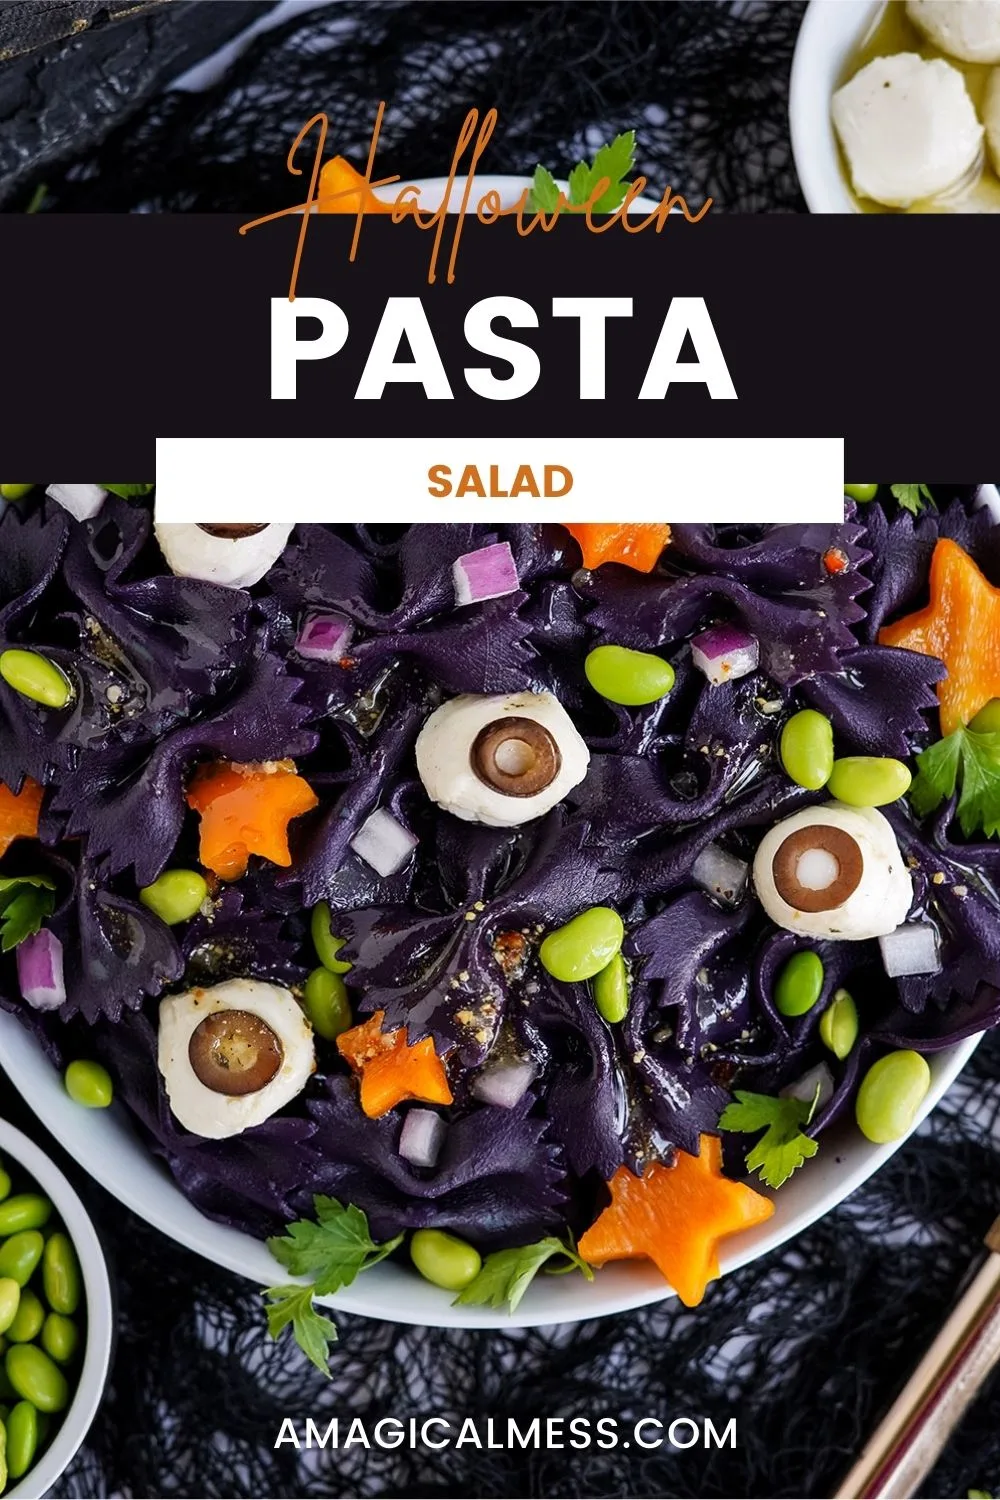 Orange, green, and purple veggies with dark pasta for a Halloween pasta salad.